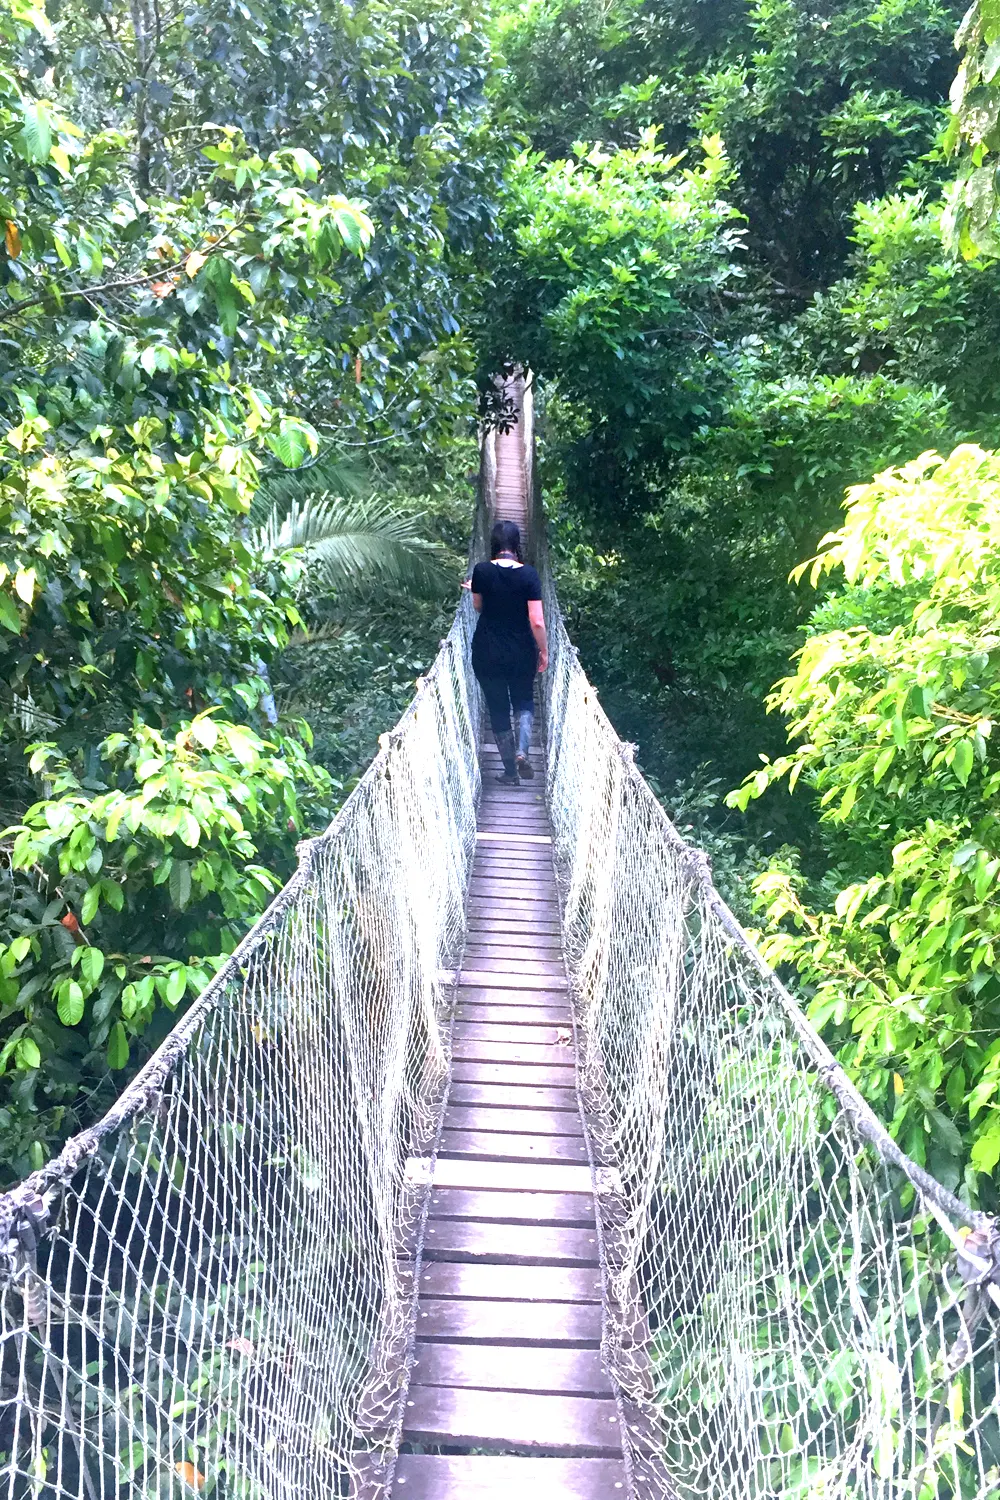 Treetop canopy at the Inkaterra Reserva Amazonica Lodge, Peru - travel & lifestyle blog